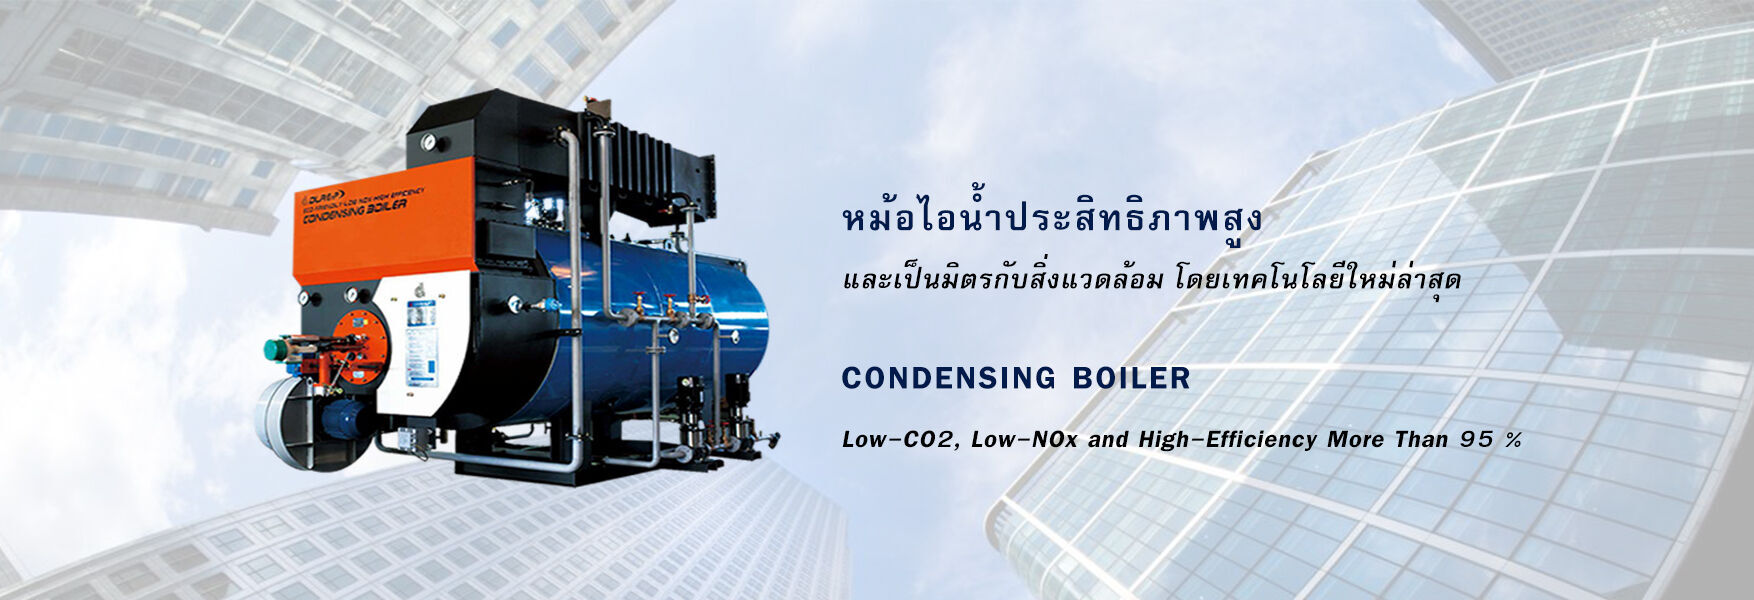 Condensing Boiler หม้อไอน้ำประสิทธิภาพสูง